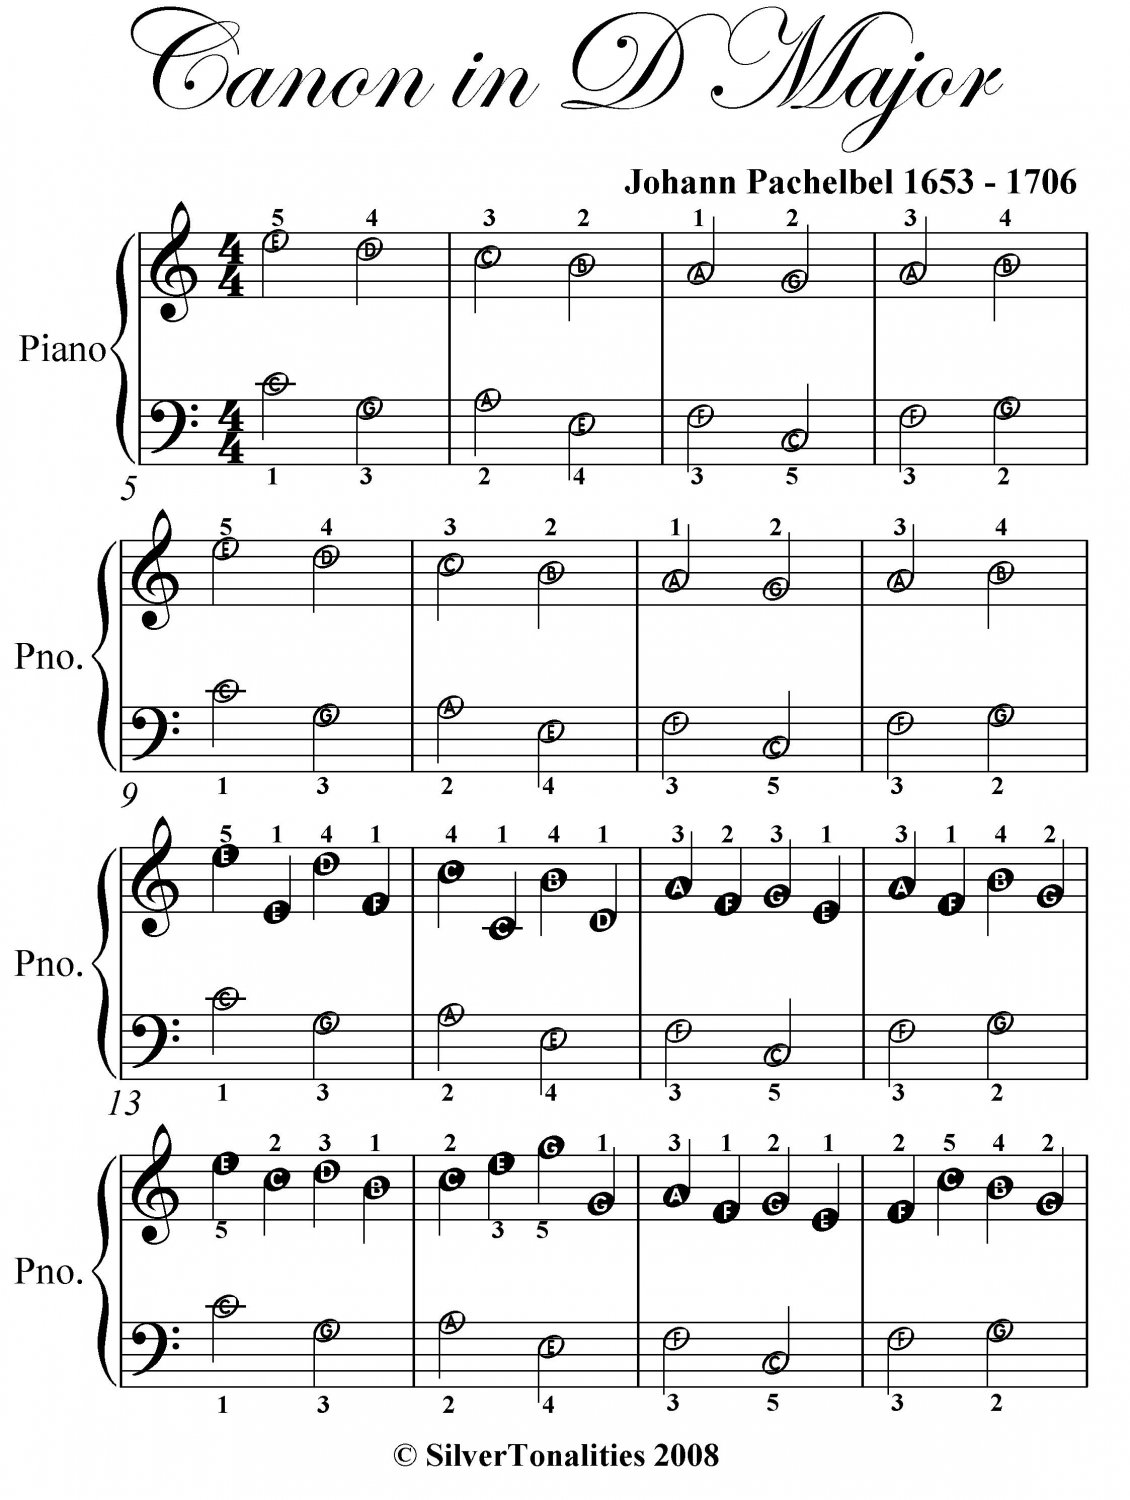 canon-in-d-piano-sheet-music-easy-canon-piano-sheet-music-pachelbel